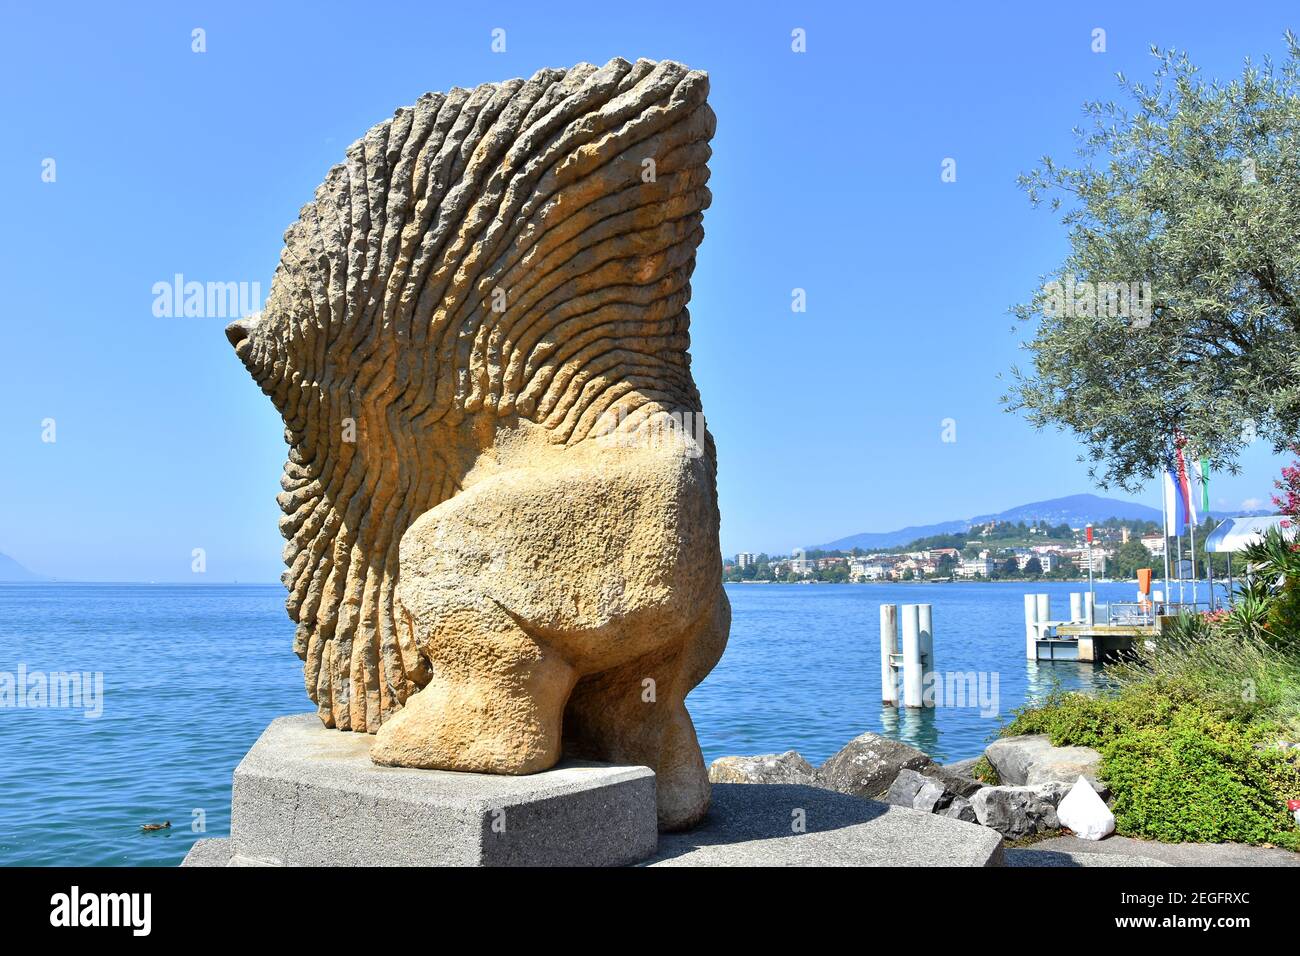 Stone sculpture of a fish with human legs on Leman (Geneva) lakeshore, Montreux Riviera, Switzerland. Stock Photo